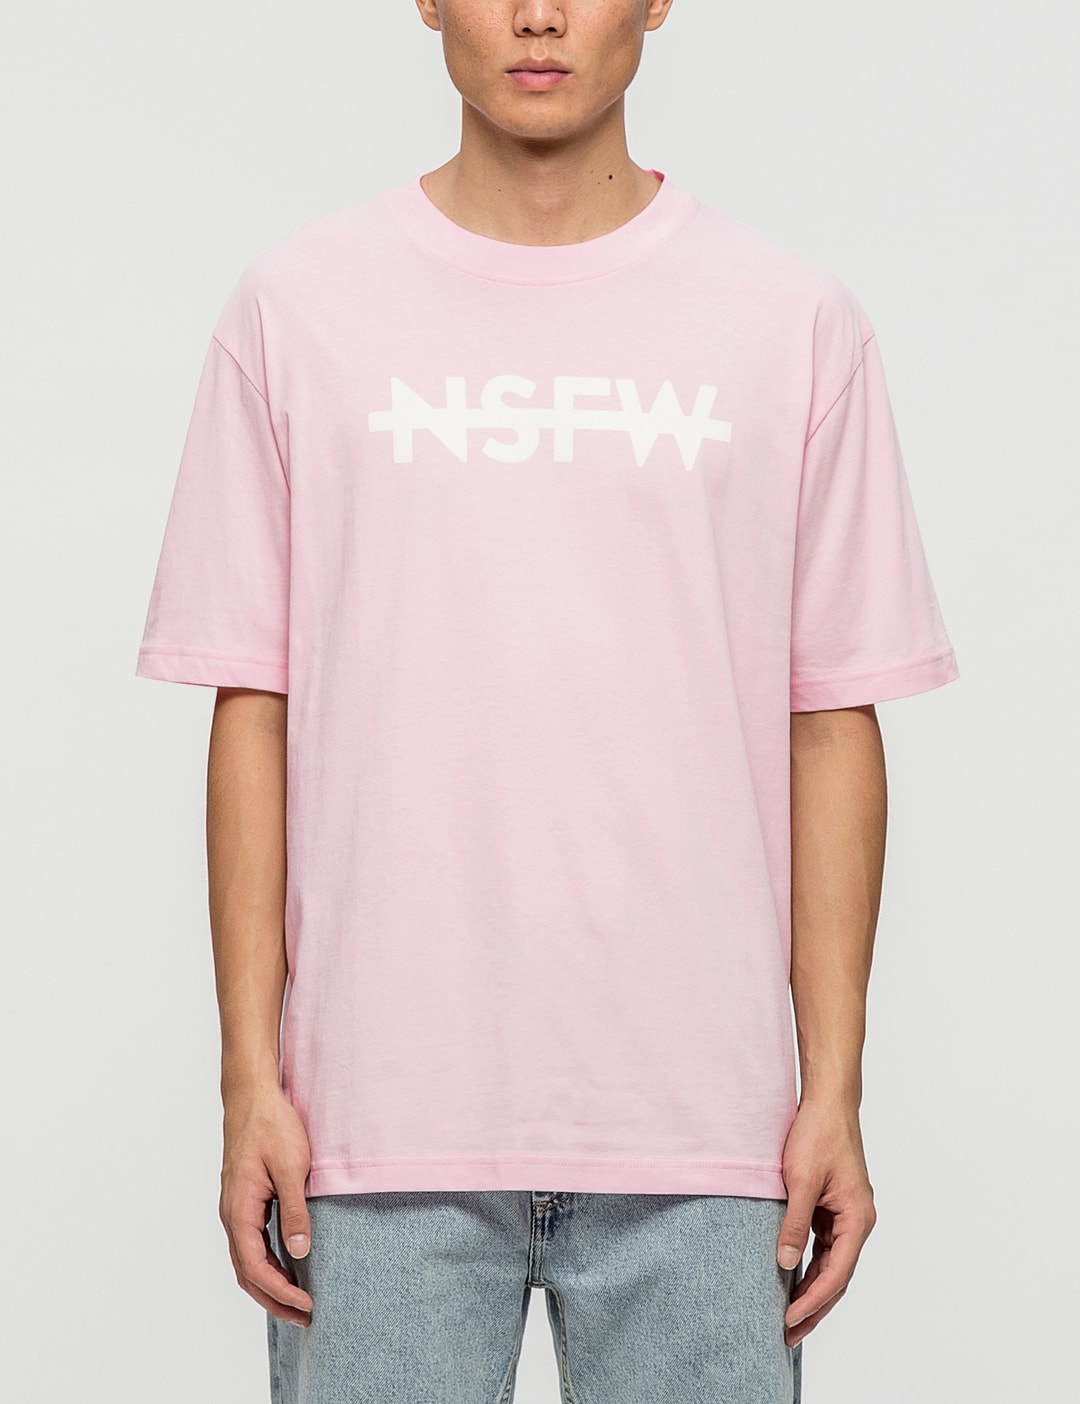 NSFW Clothing - Strikethrough T-Shirt | HBX - Globally Curated Fashion ...